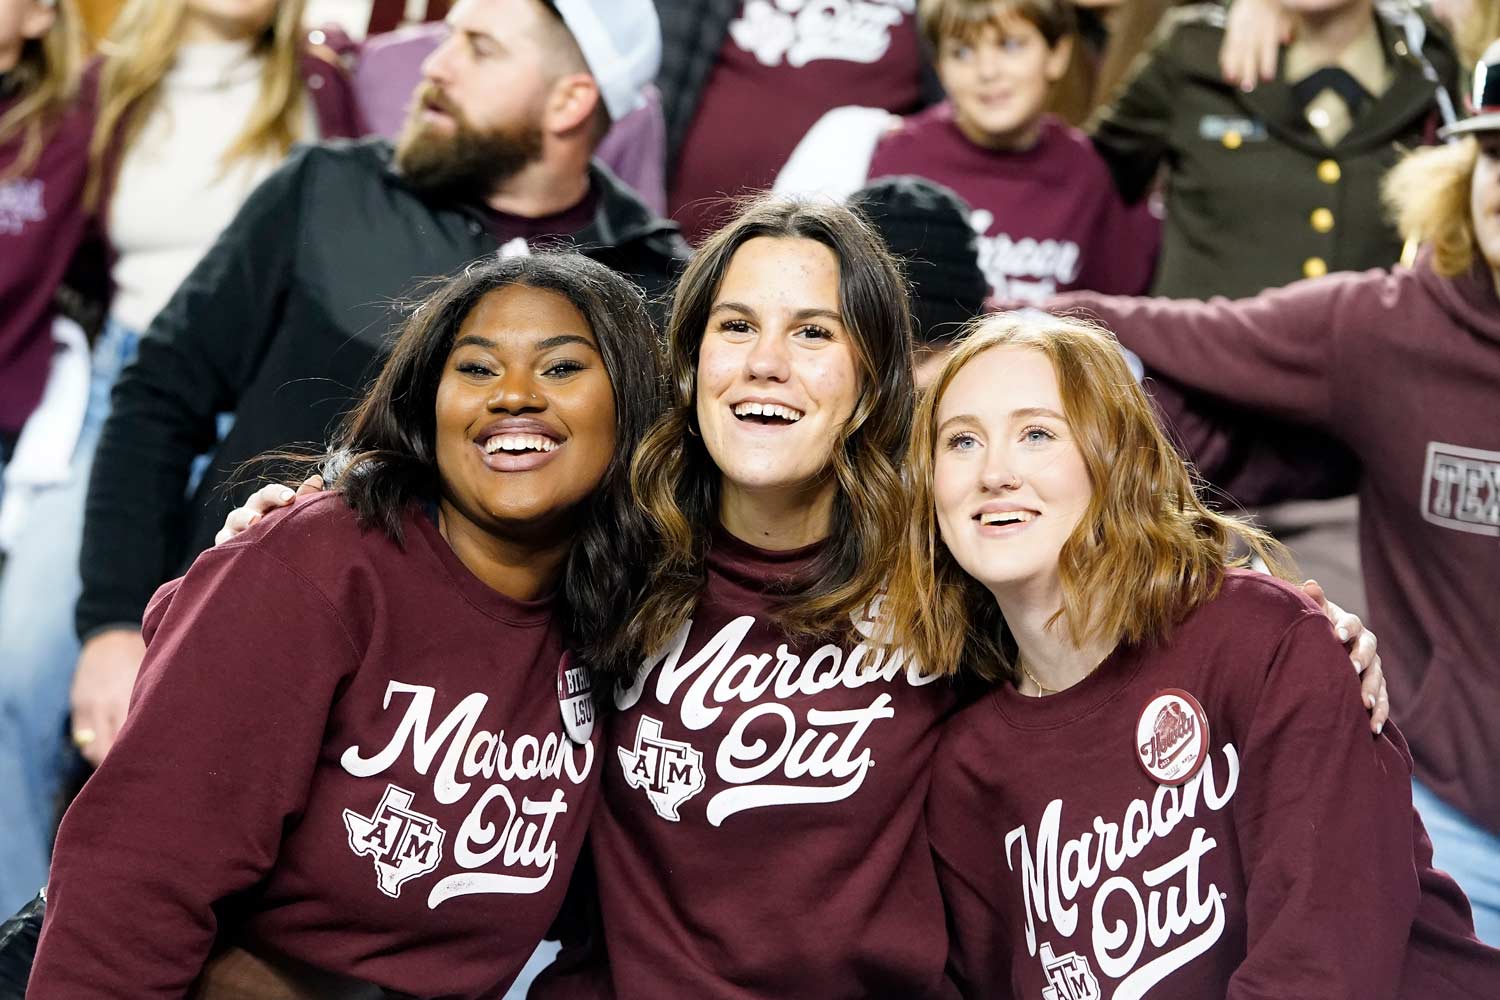 Three Aggies wearing maroon sweatshirts reading, "Maroon Out" pose at a football game.